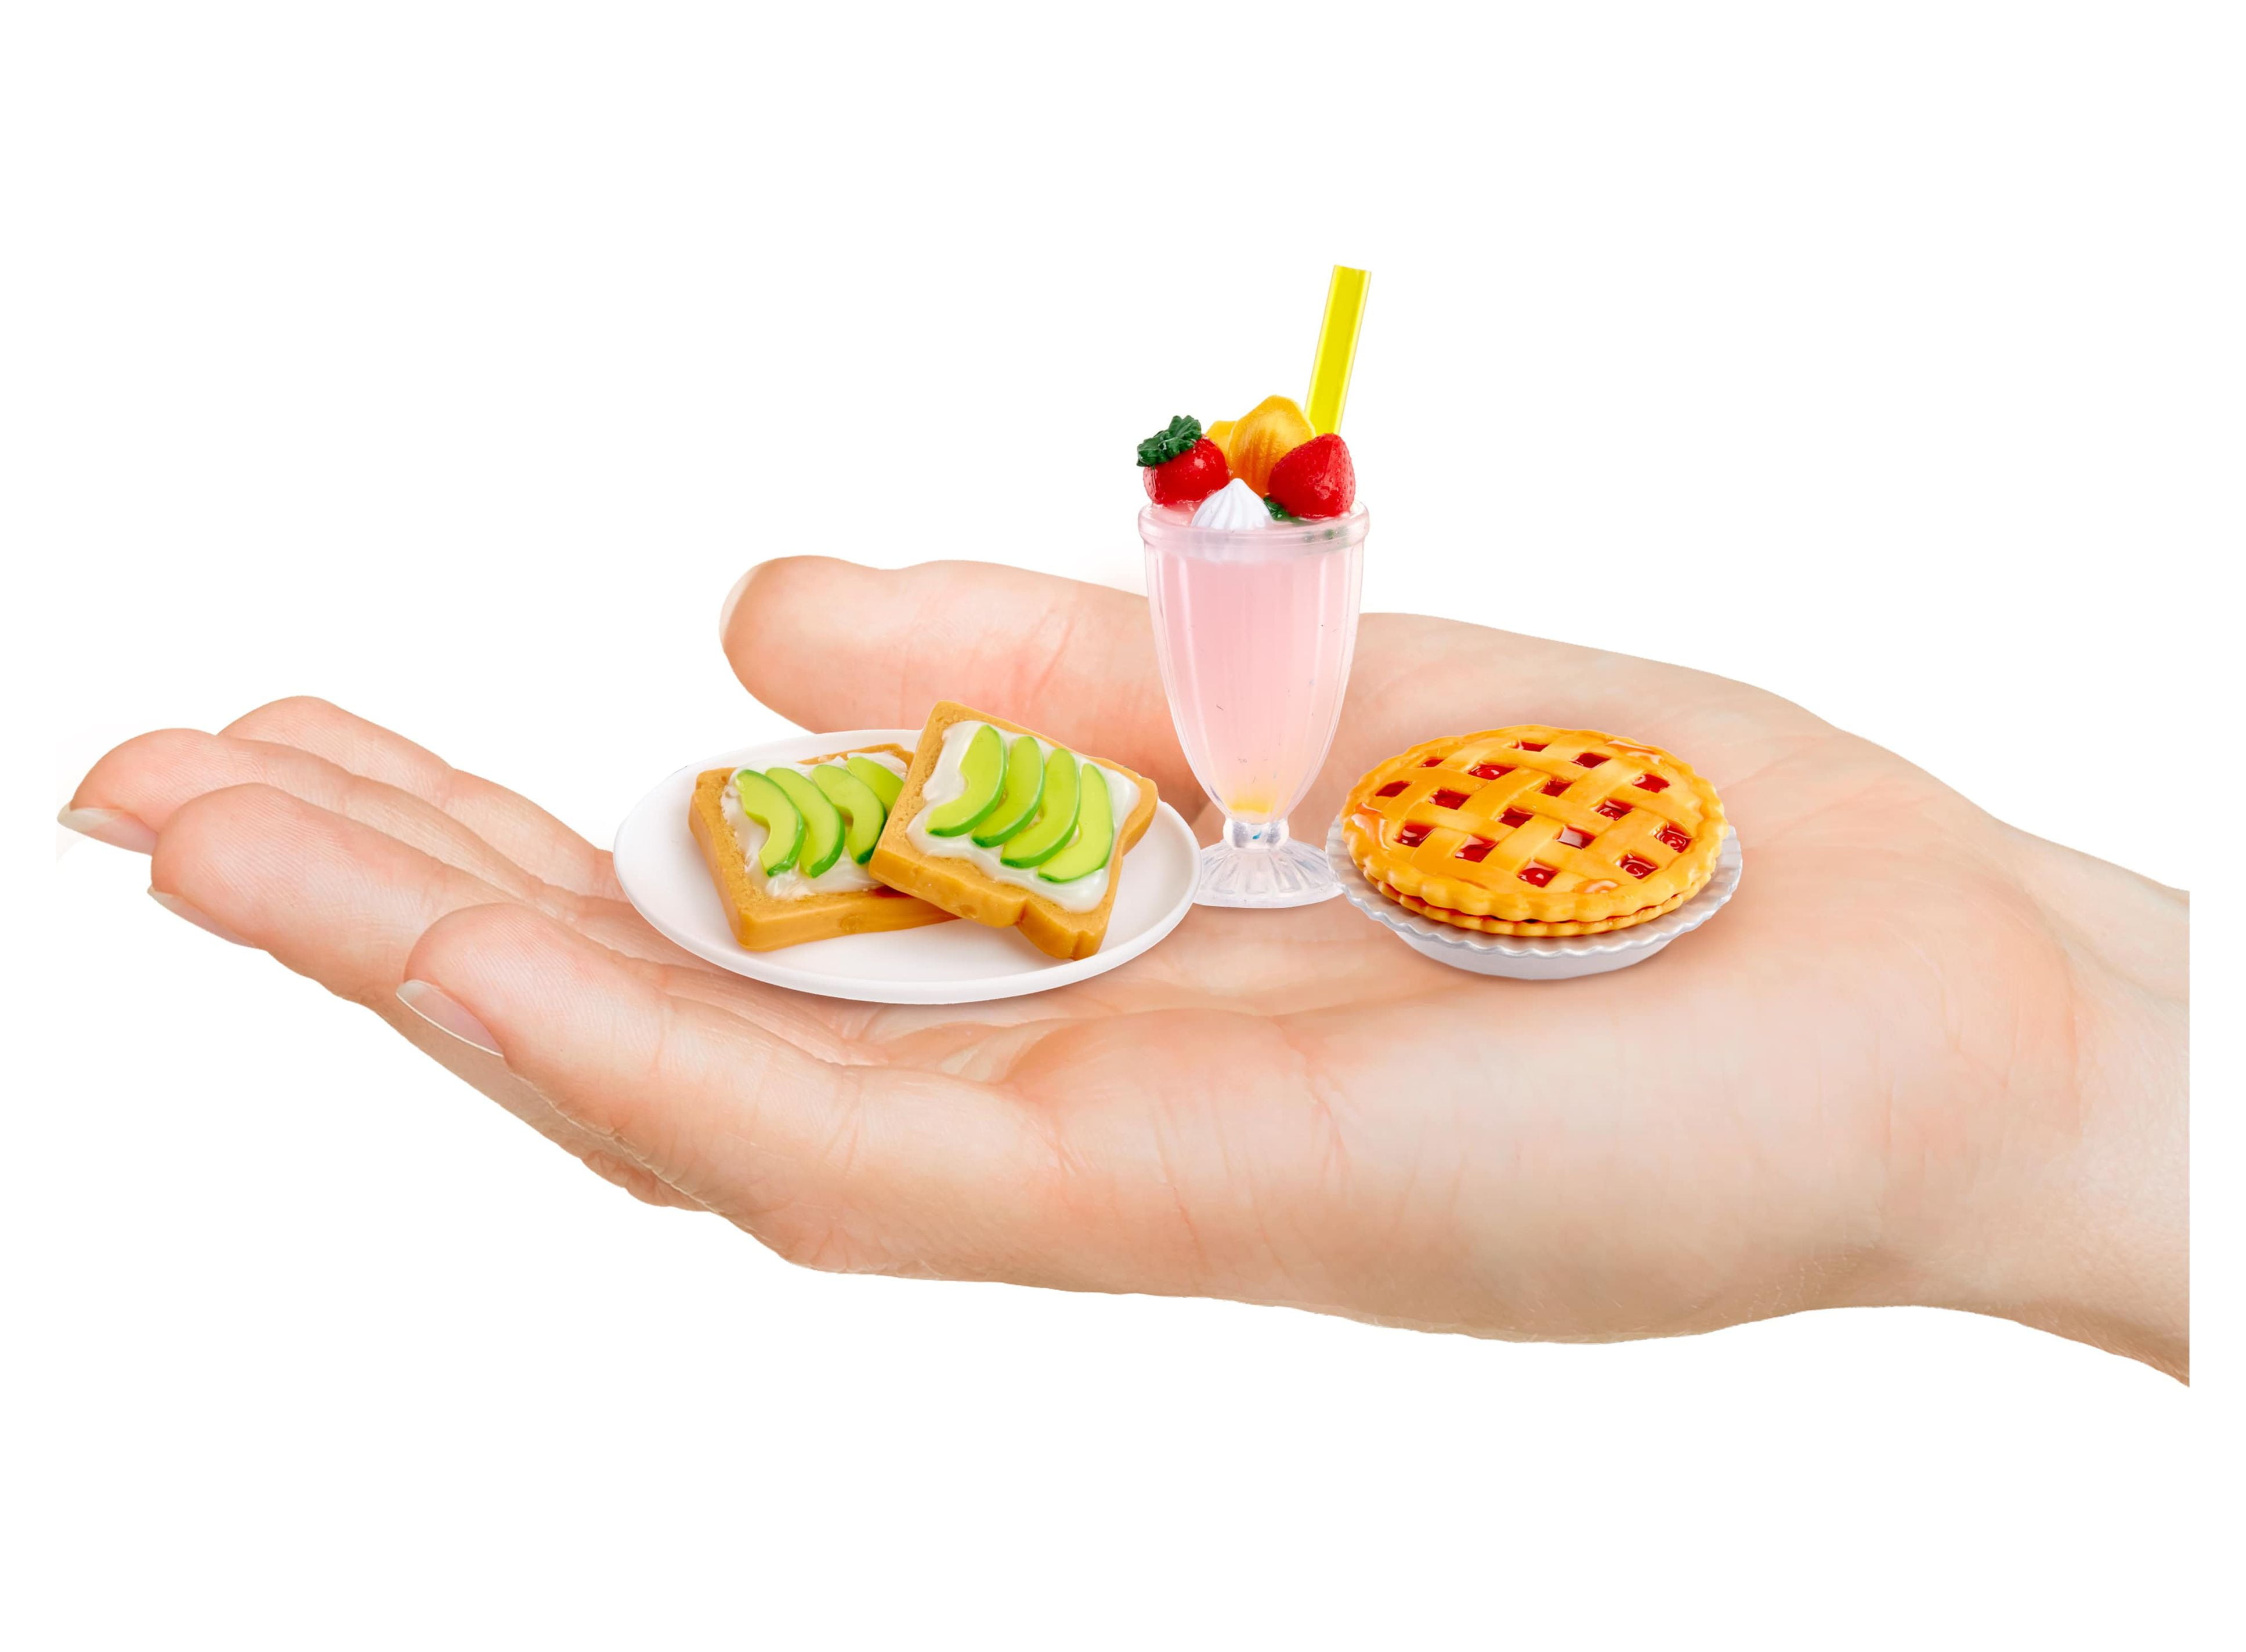 Make It Mini Food Diner Series 1 Mini Collectibles - MGA's Miniverse, Blind  Packaging, DIY, Resin Play, Replica Food, NOT EDIBLE, Collectors, 8+